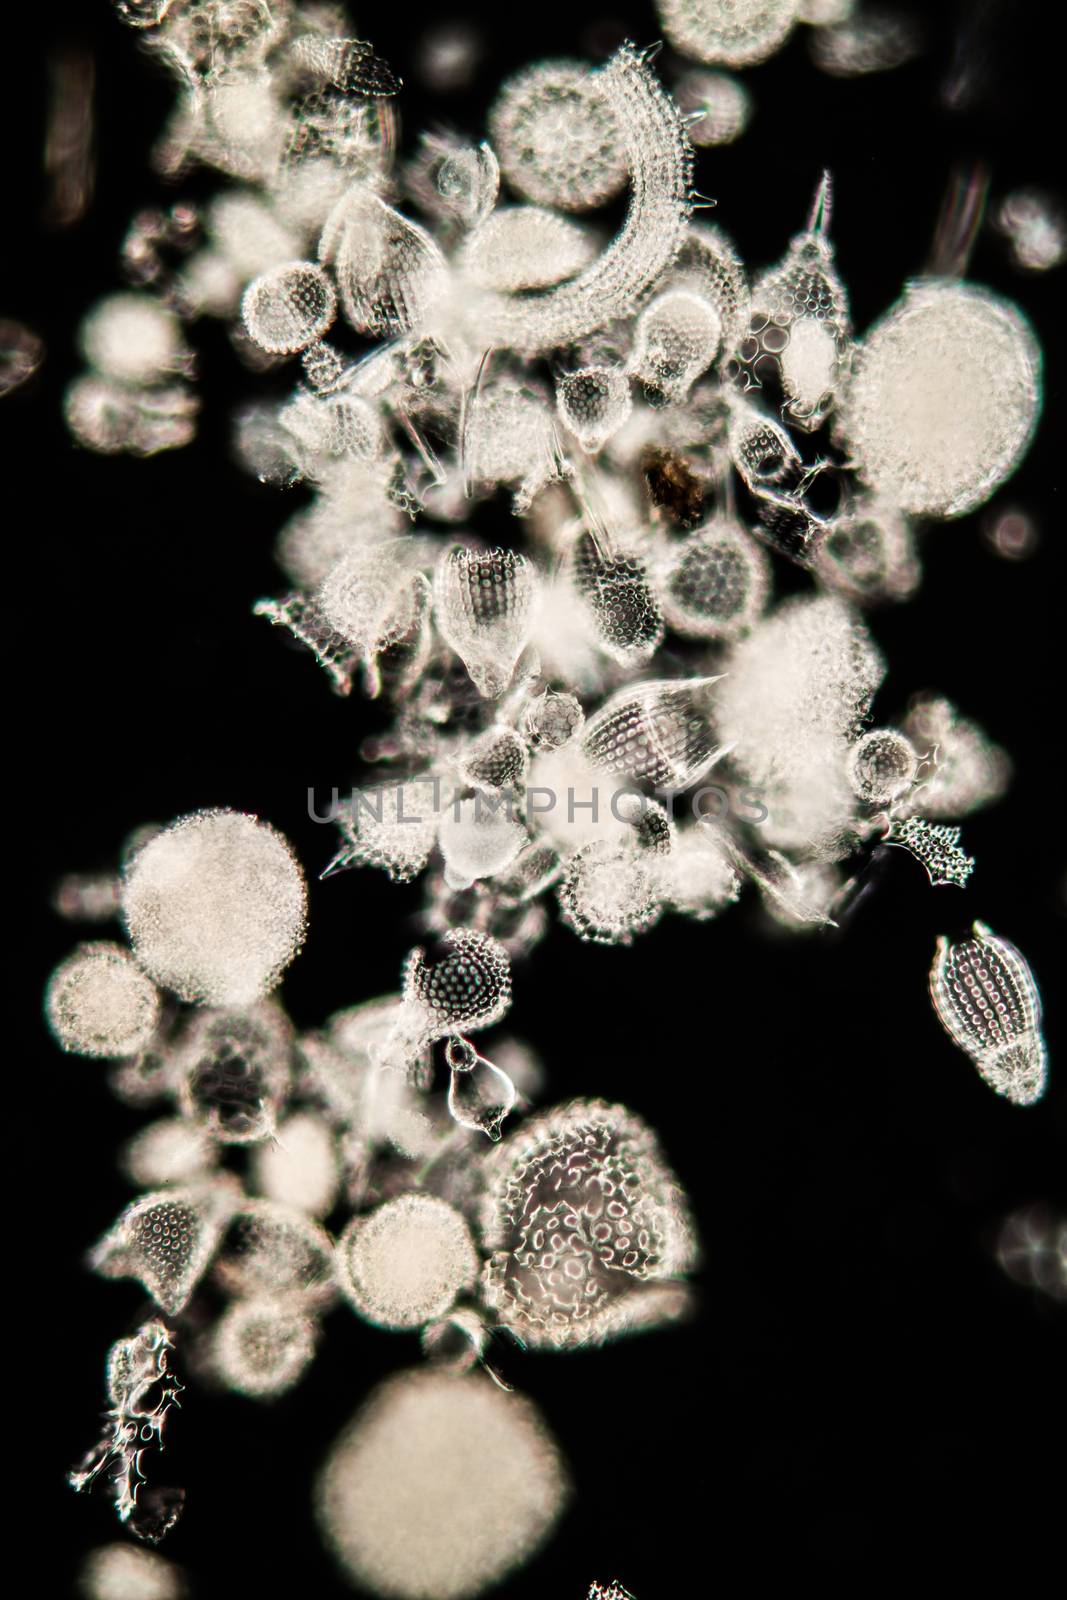 Radiolaria marine animals under the microscope 100x by Dr-Lange